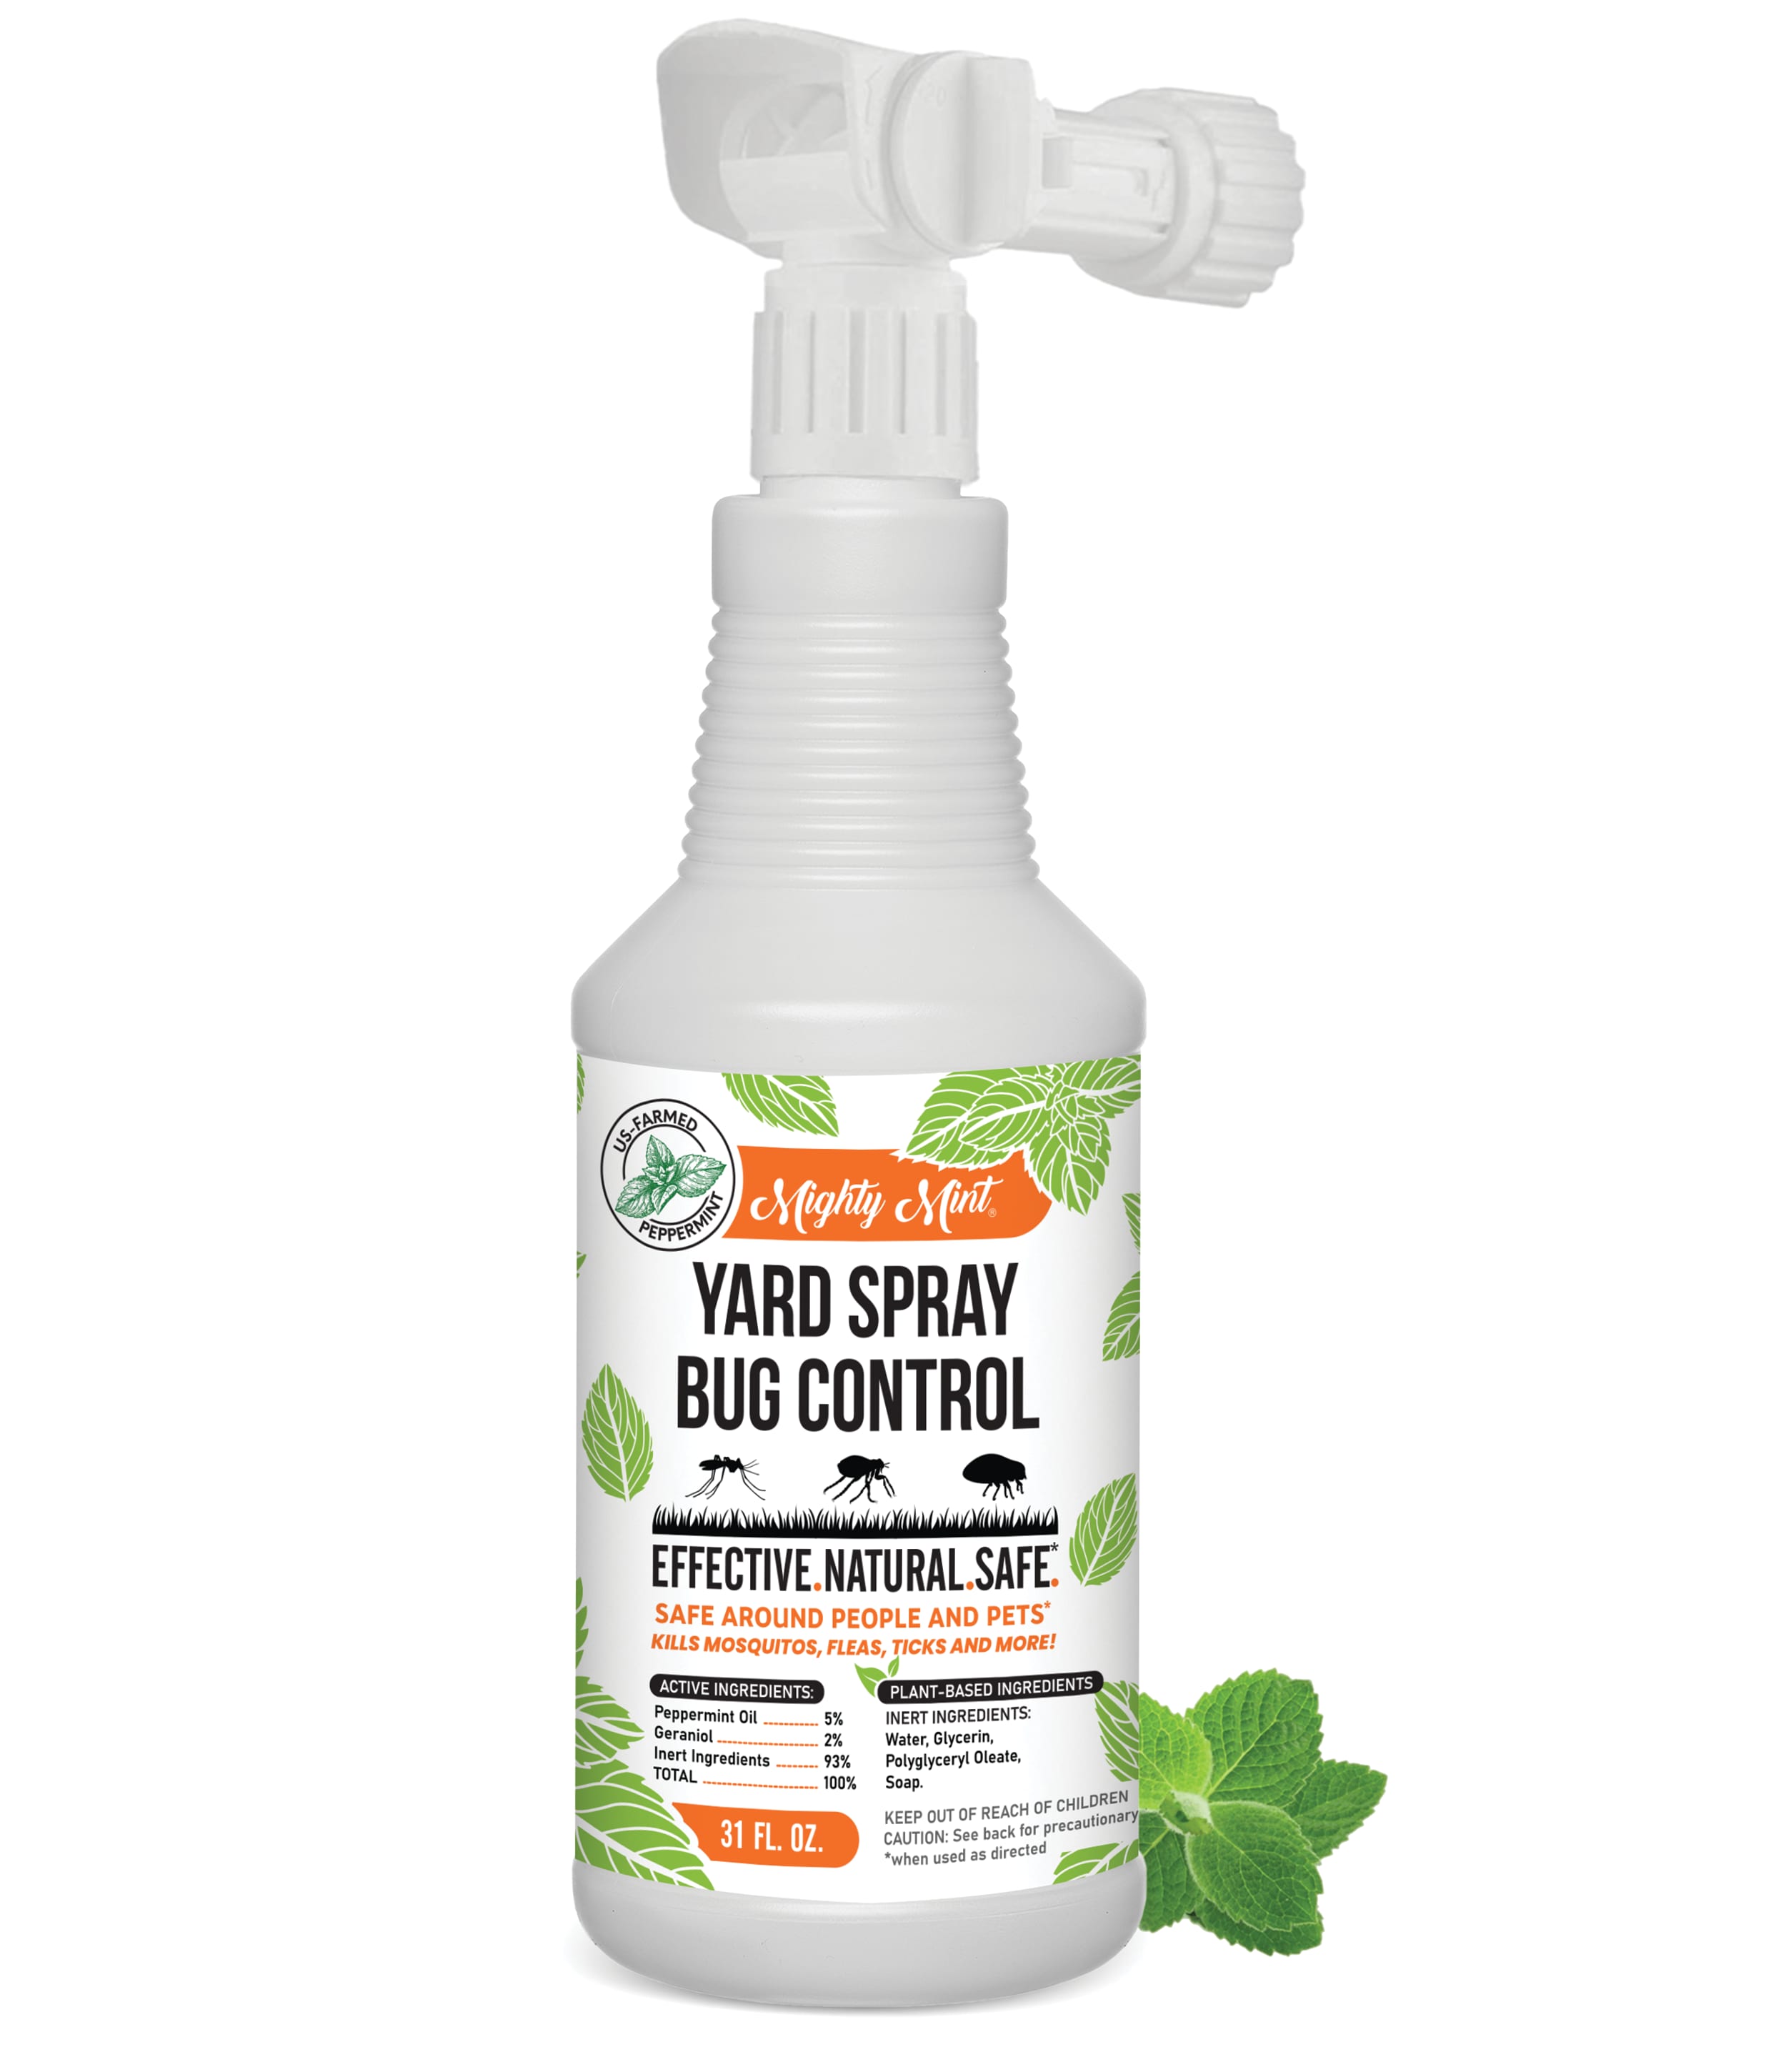 SMELLS BEGONE 8oz (2-Pack) Home Air Freshener Spray